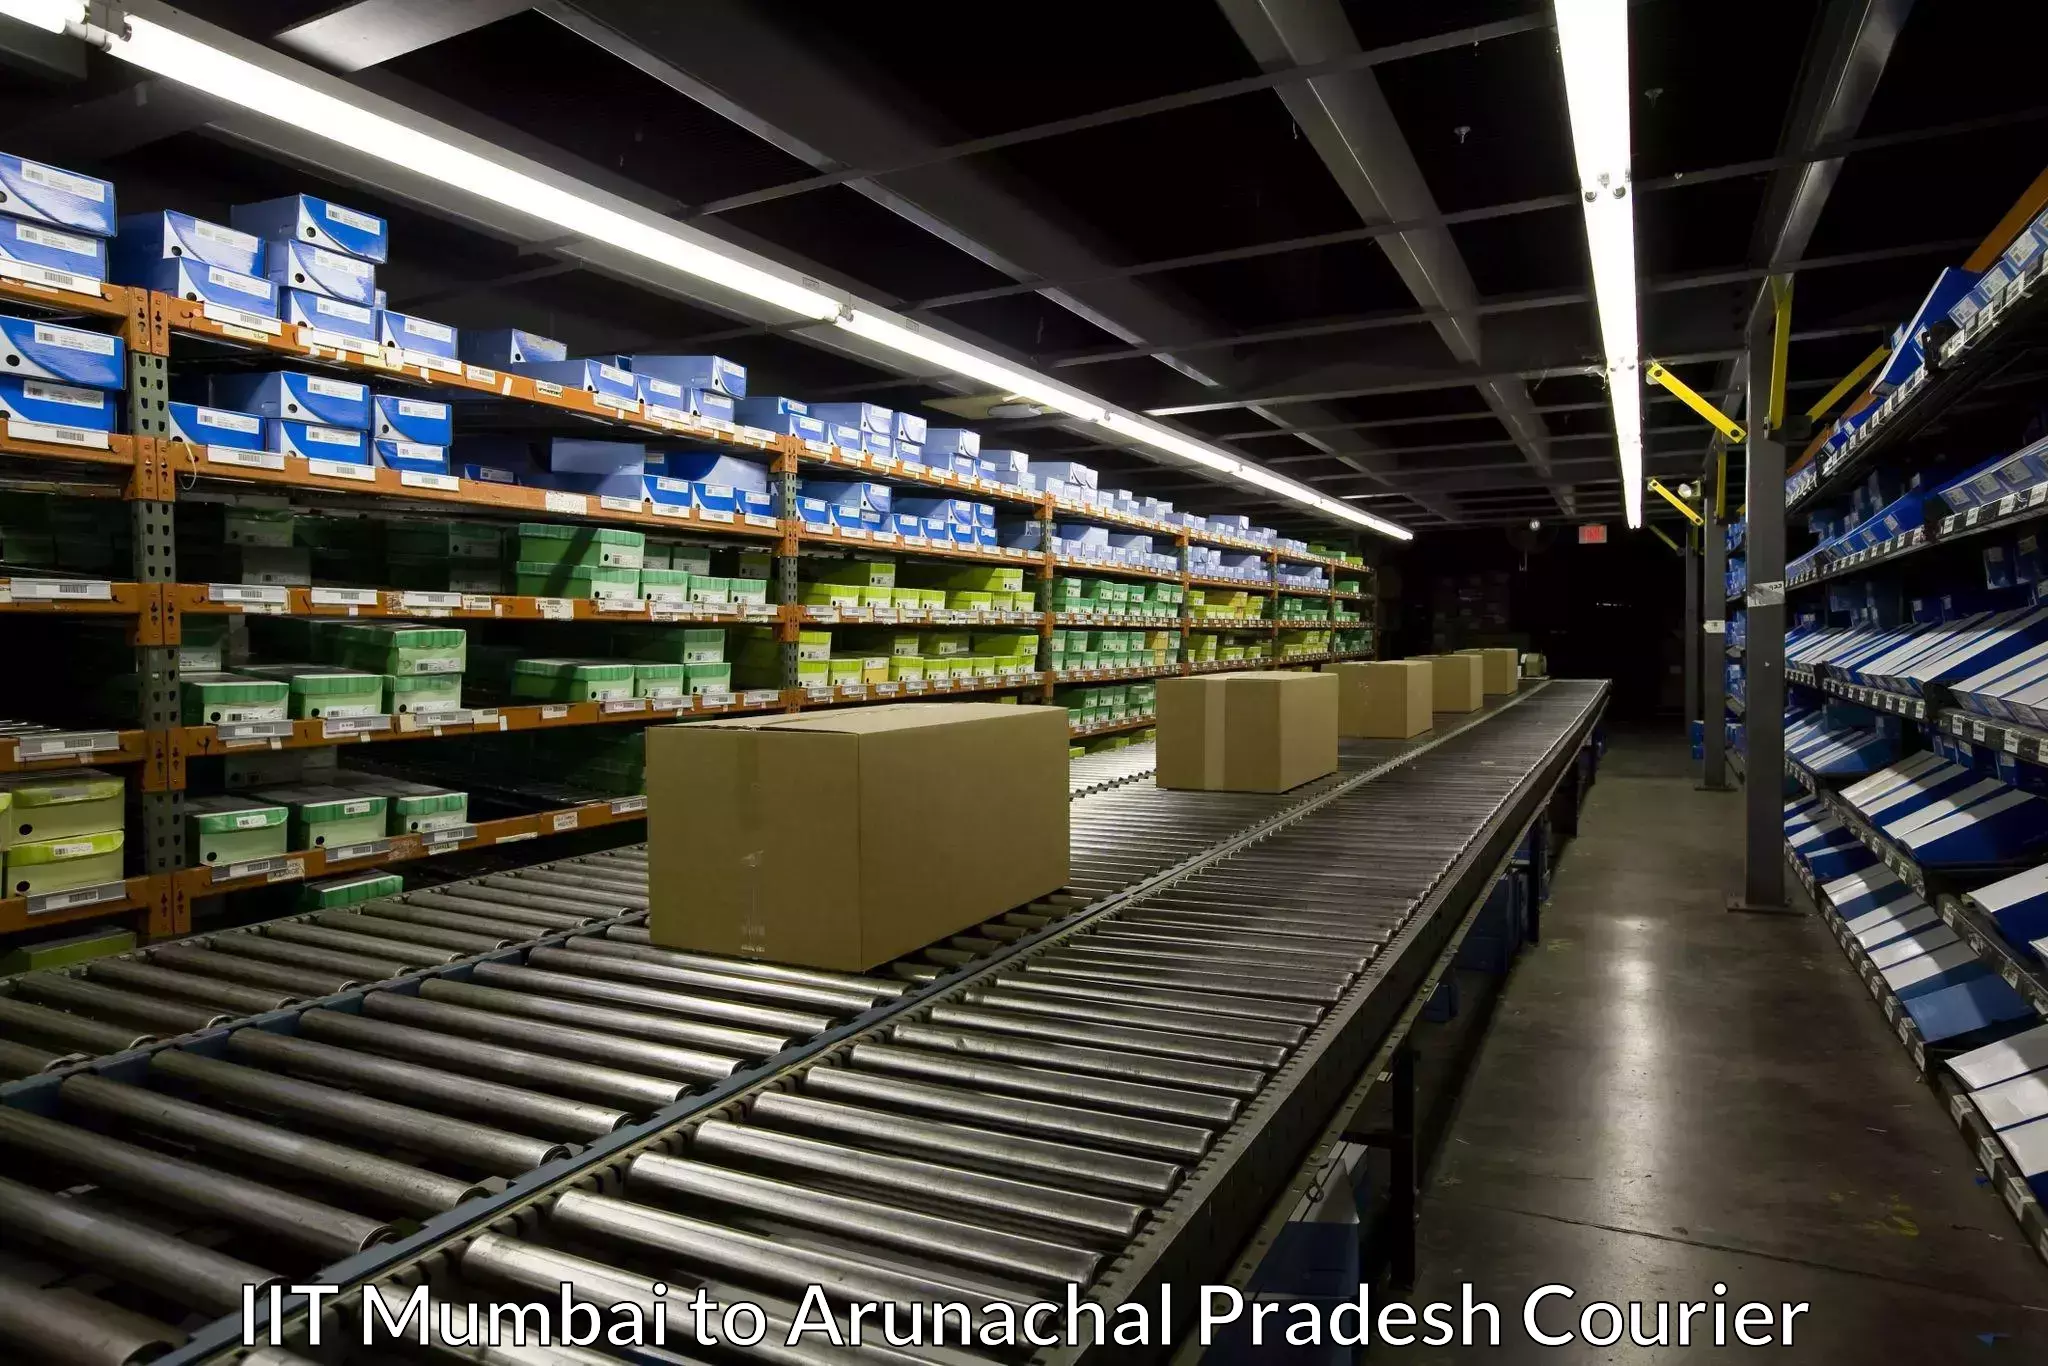 Cash on delivery service IIT Mumbai to Arunachal Pradesh